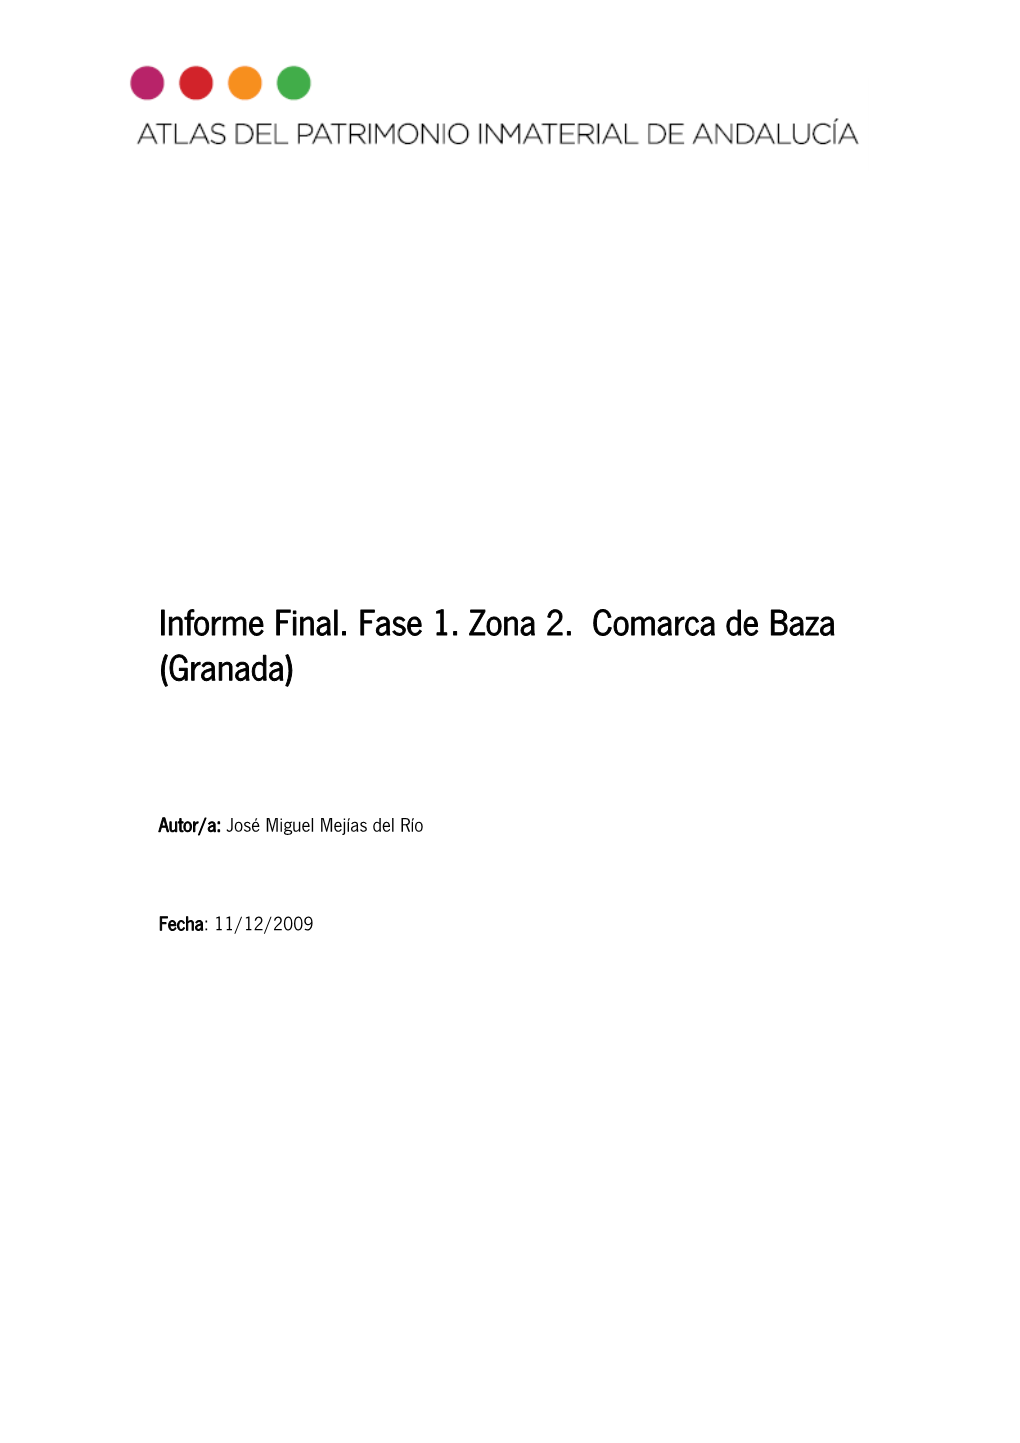 Informe Final. Fase 1. Zona 2. Comarca De Baza (Granada)